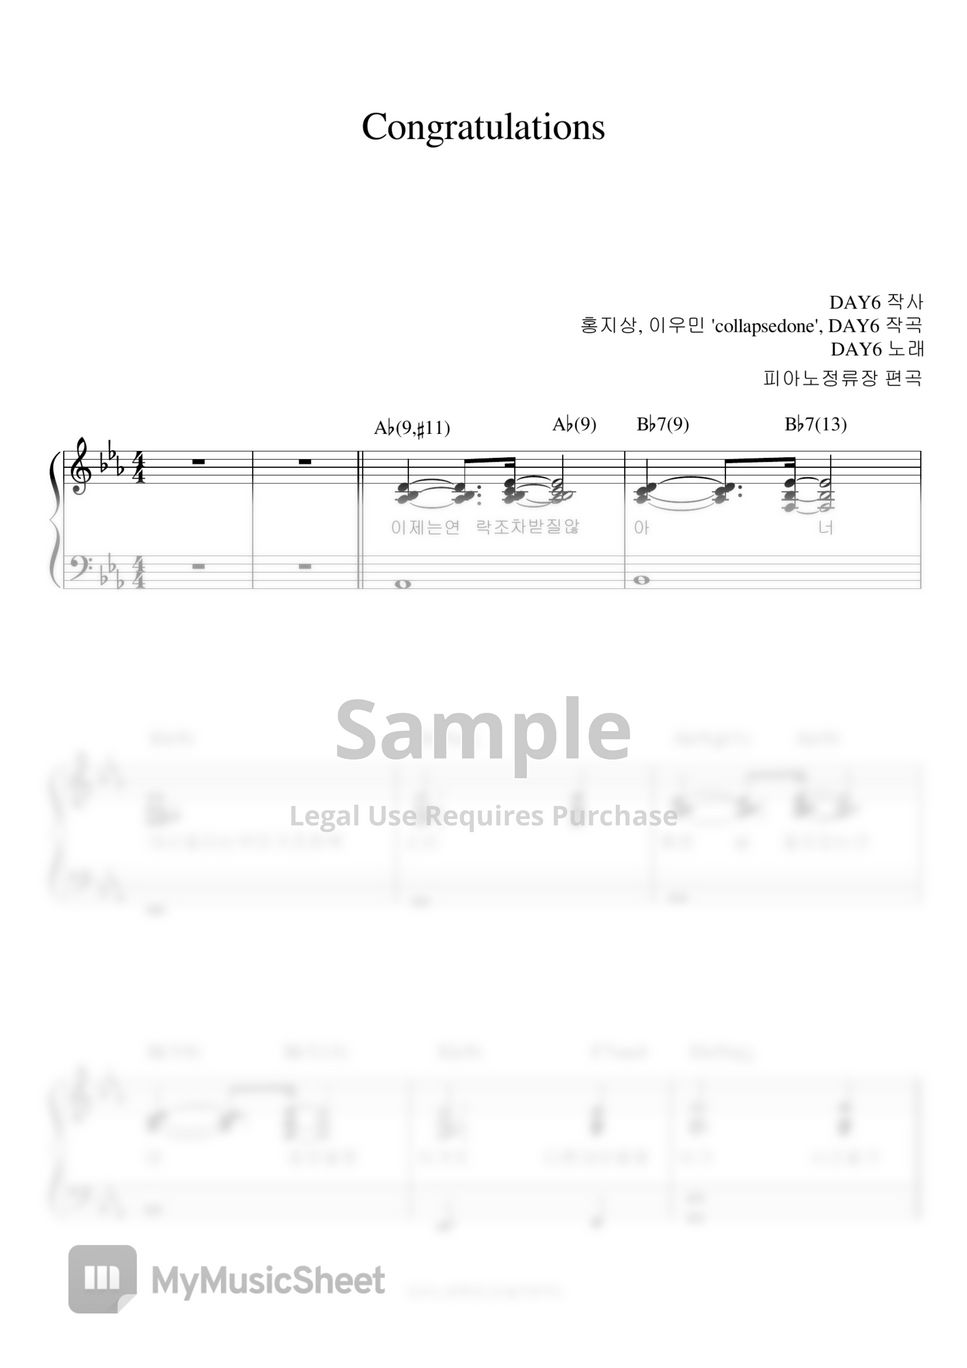 DAY6 (데이식스) - Congratulations (반주악보) by 피아노정류장